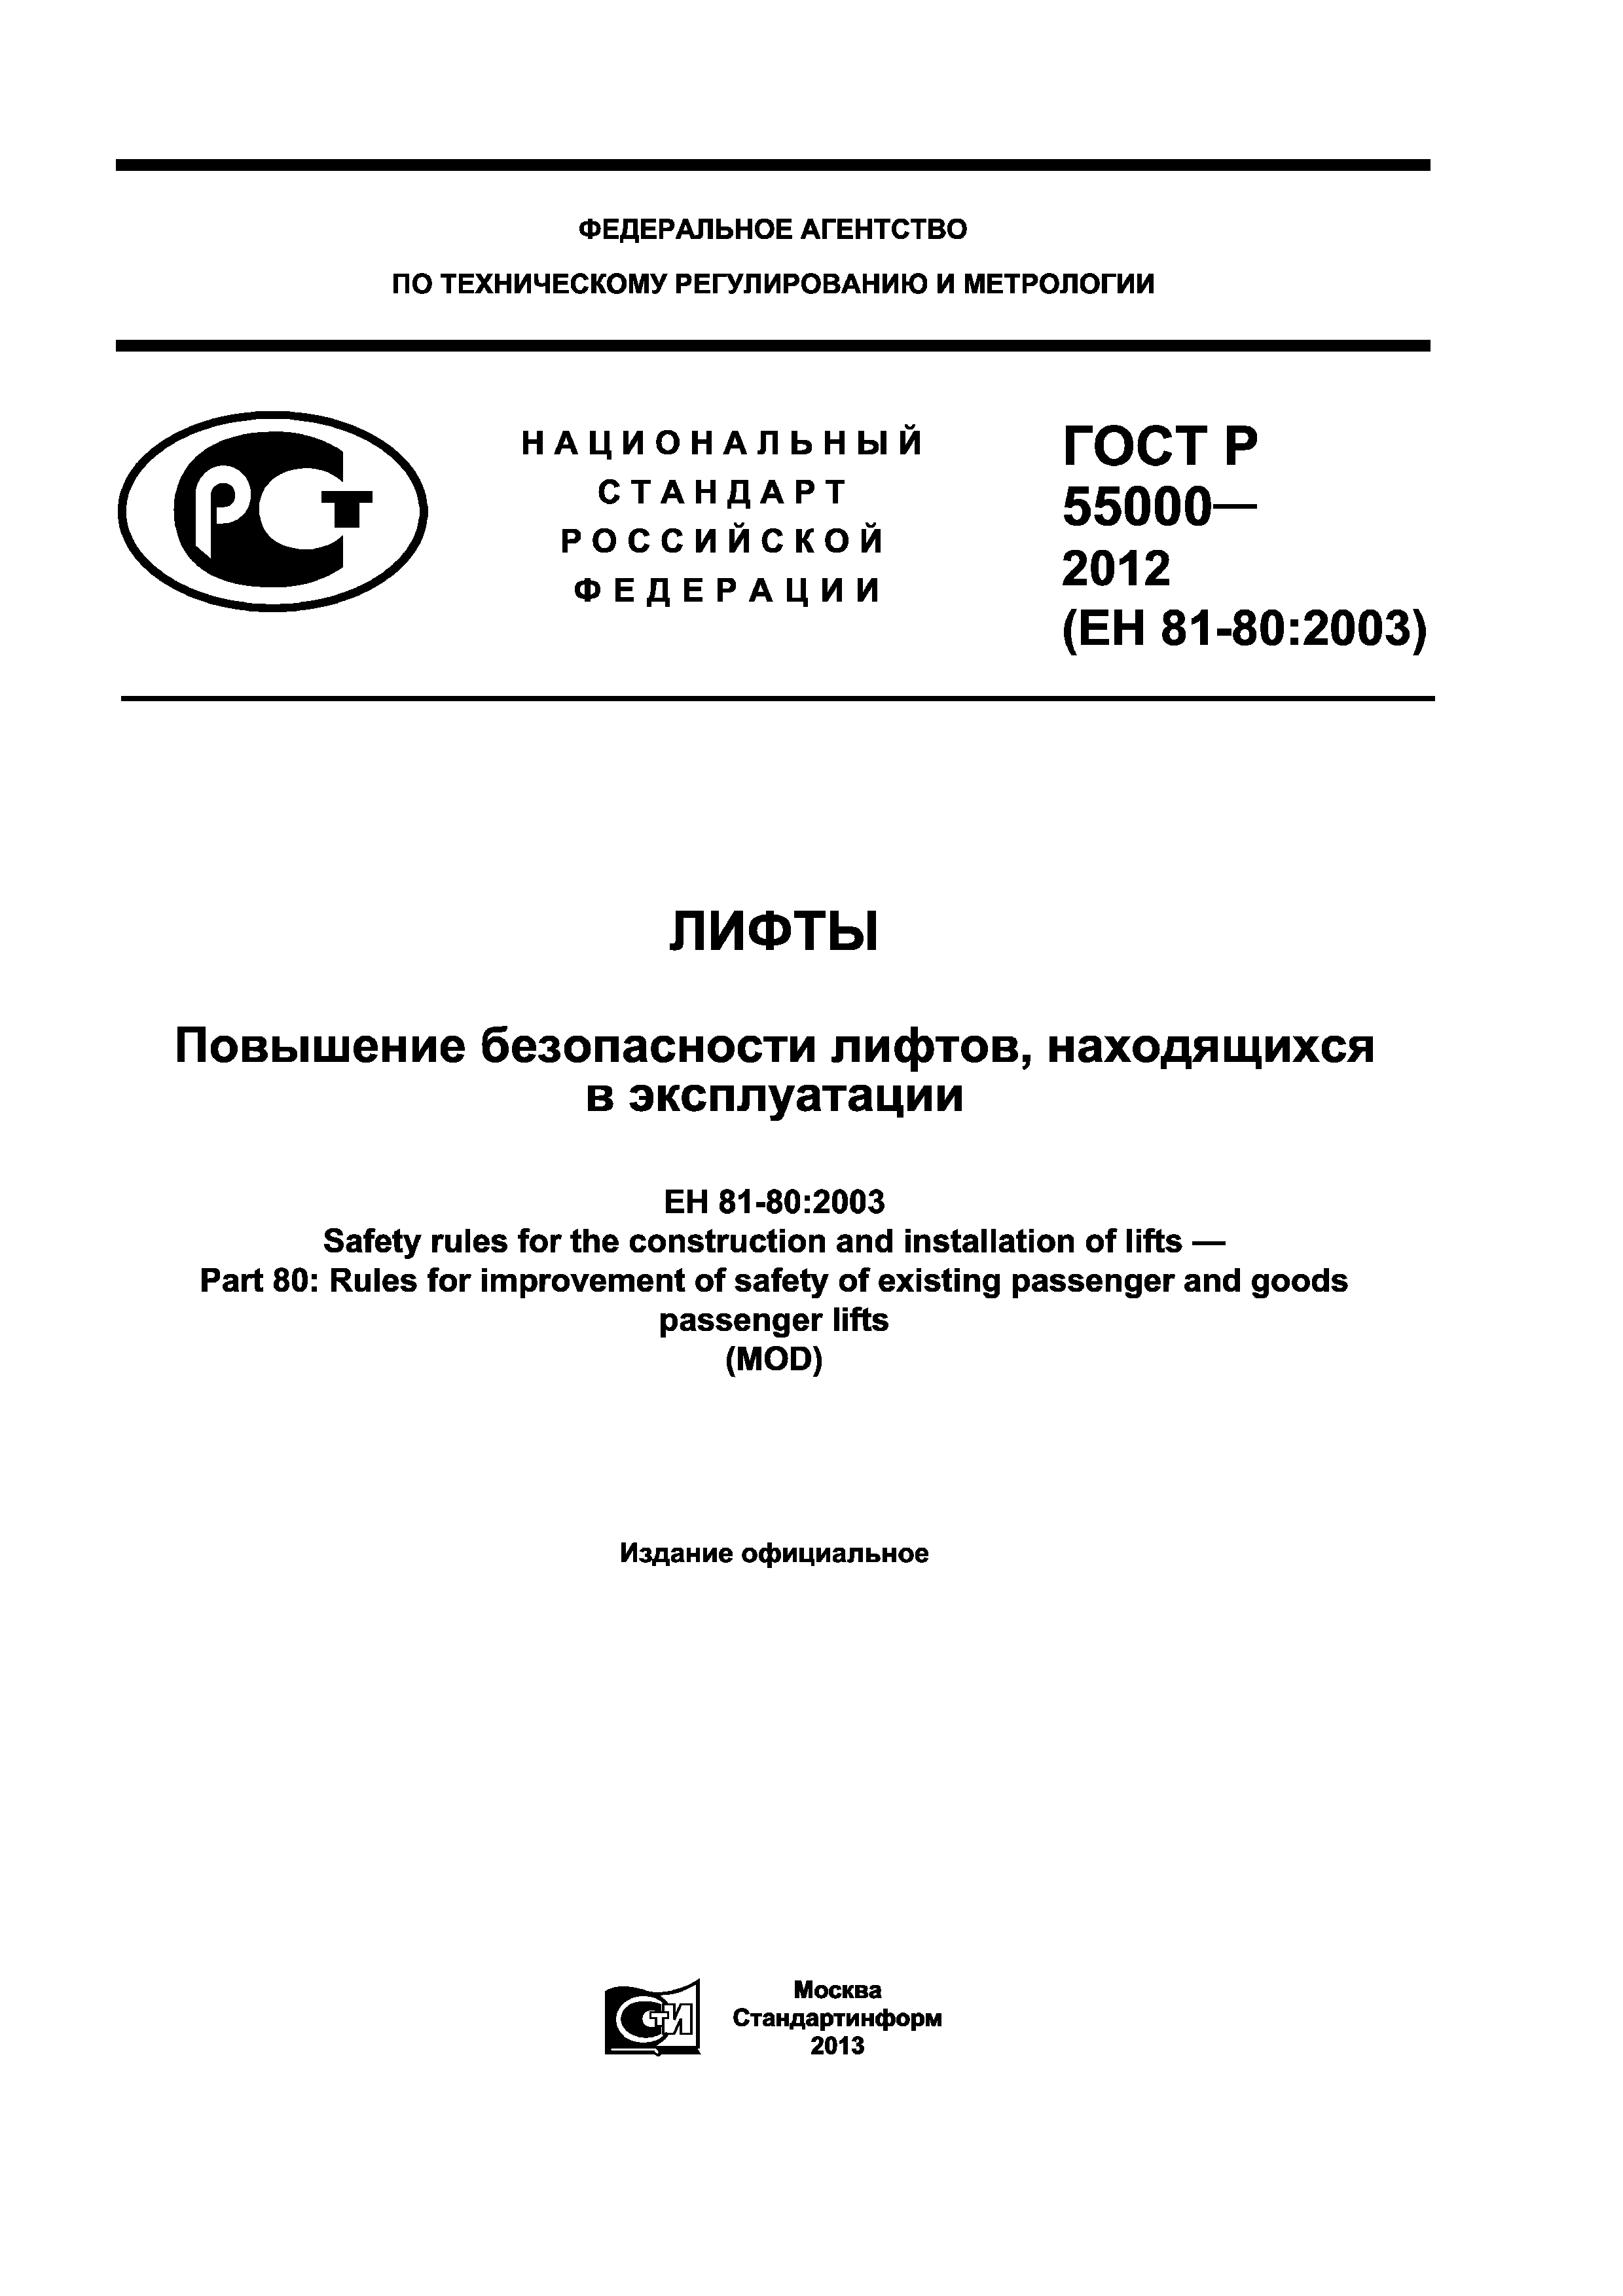 ГОСТ Р 55000-2012